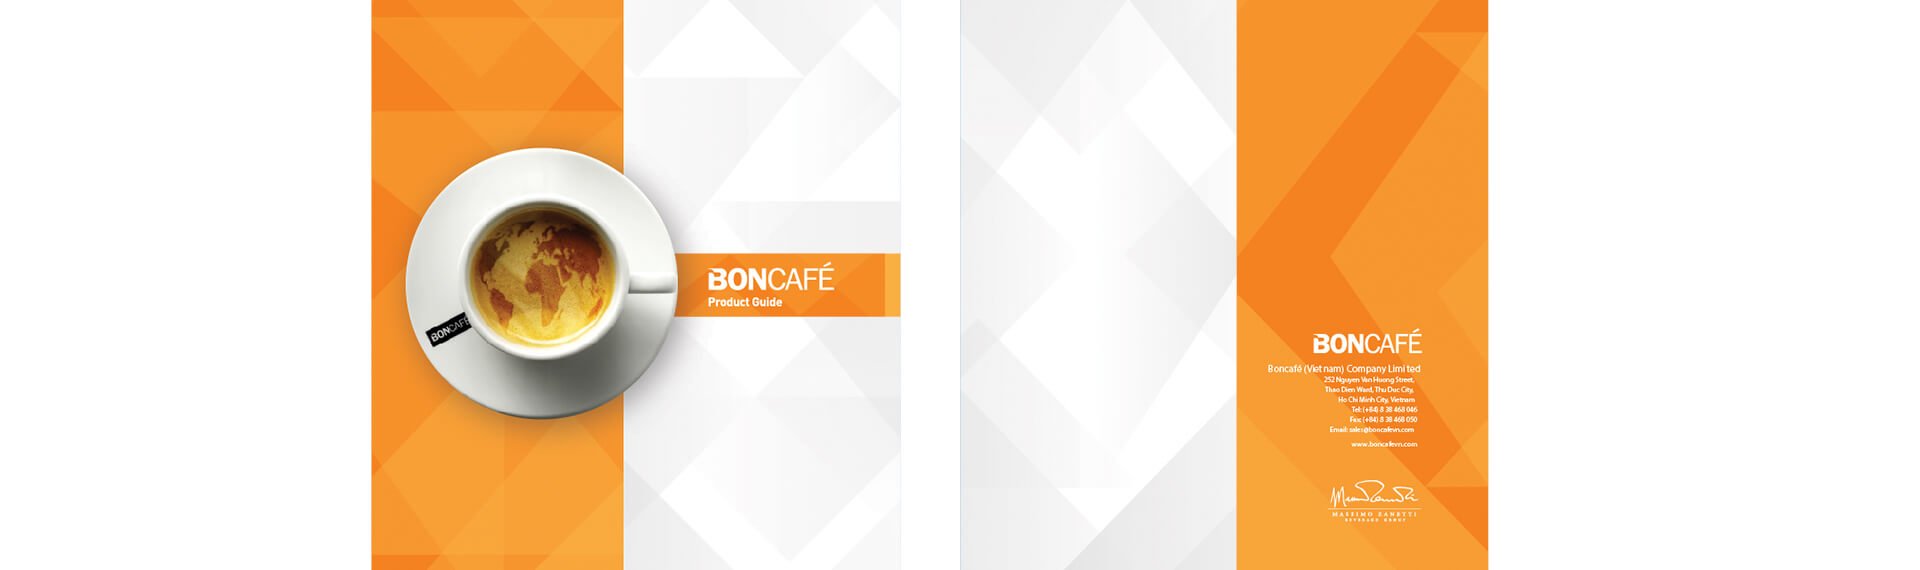 BCVN Boncafe Vietnam New Product Guide Cover